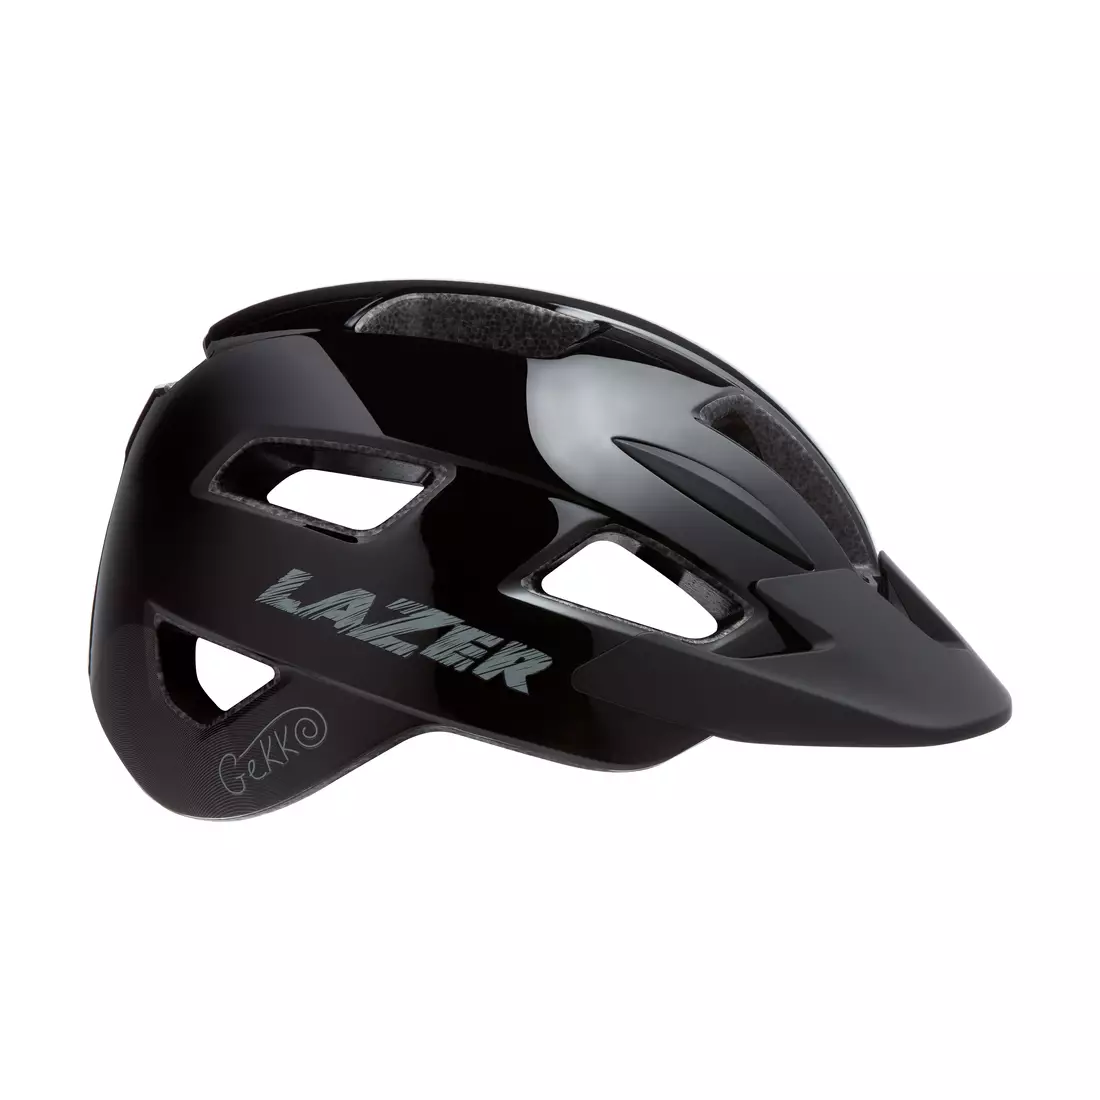 LAZER children's/junior bicycle helmet gekko ce-cpsc black BLC2207888187